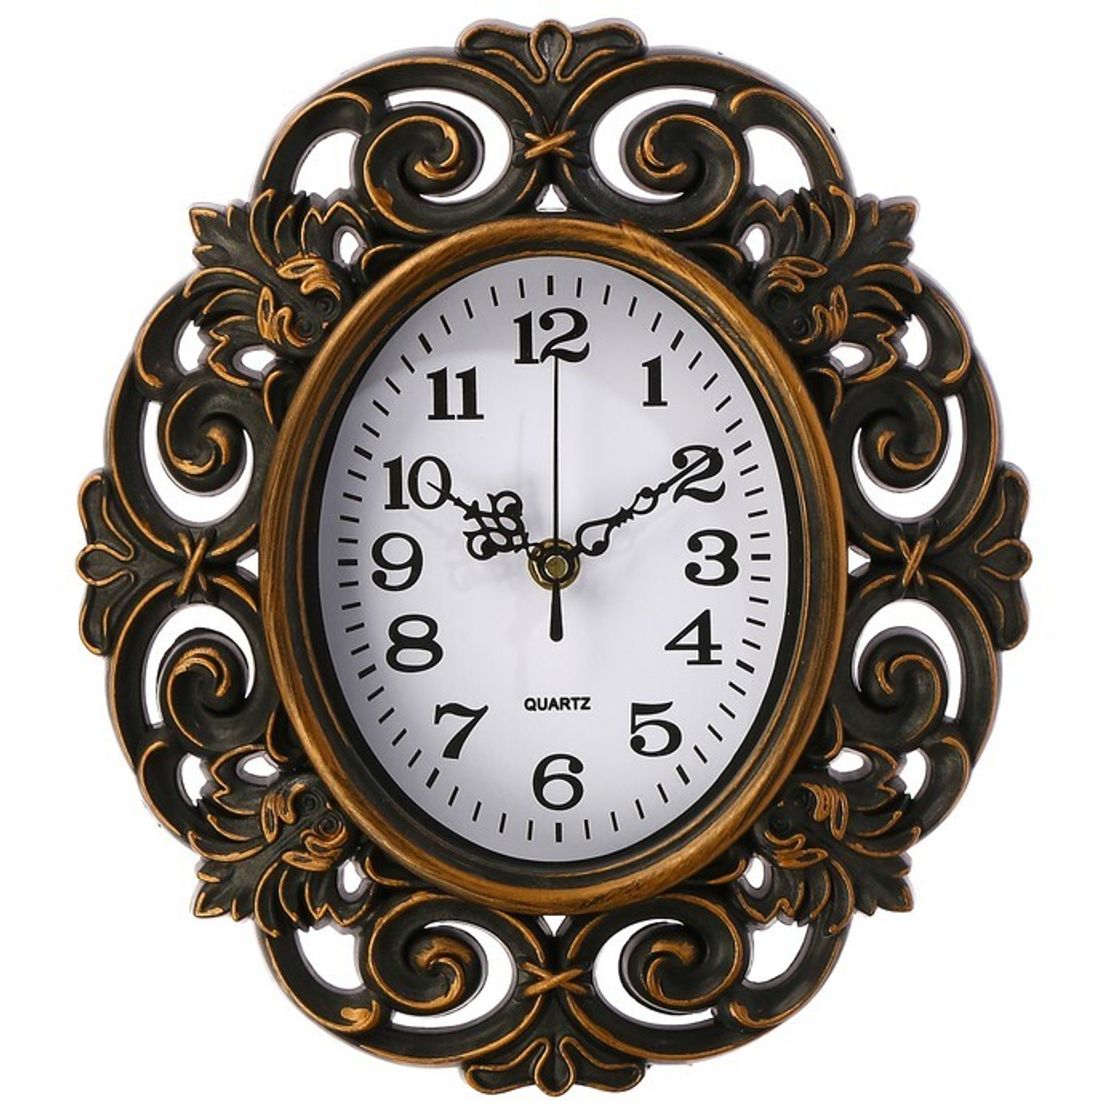 Часы настенные омск. Часы настенные. Интерьерные часы. Интерьерные часы настенные. Настенные часы в классическом стиле.